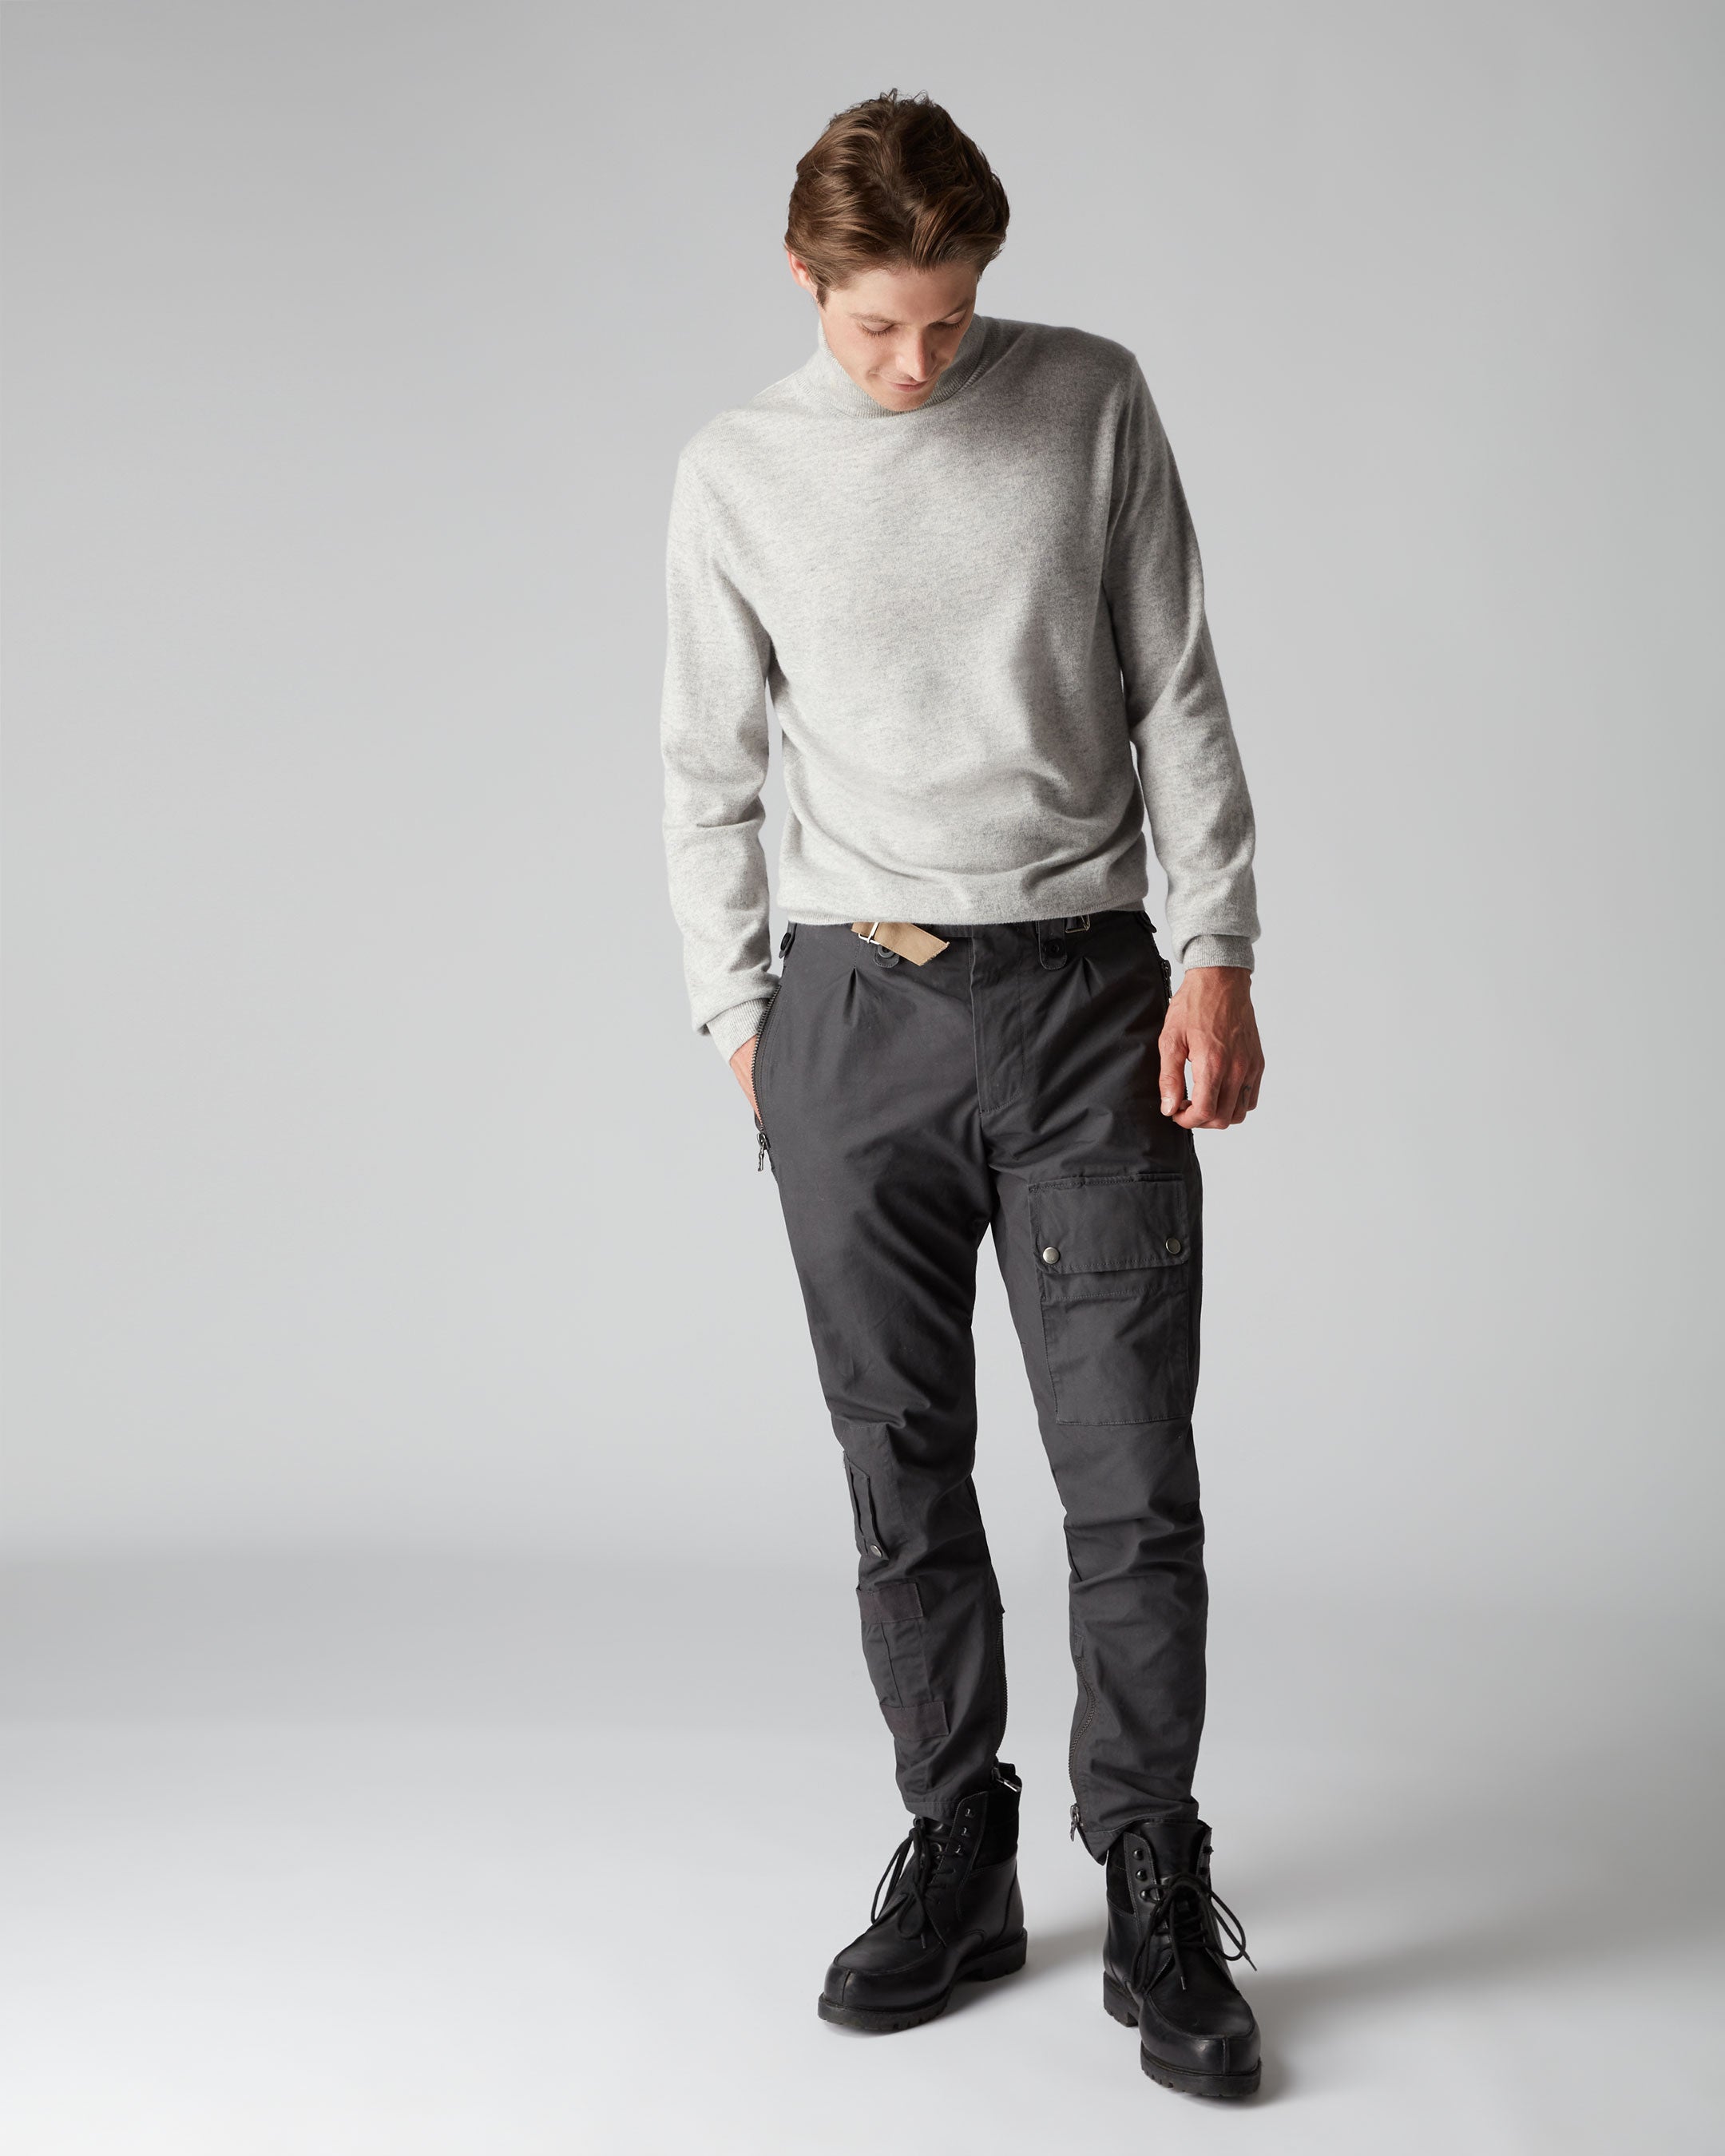 Review: Abercrombie Petite Sloane Tailored Trousers - Stylish Petite